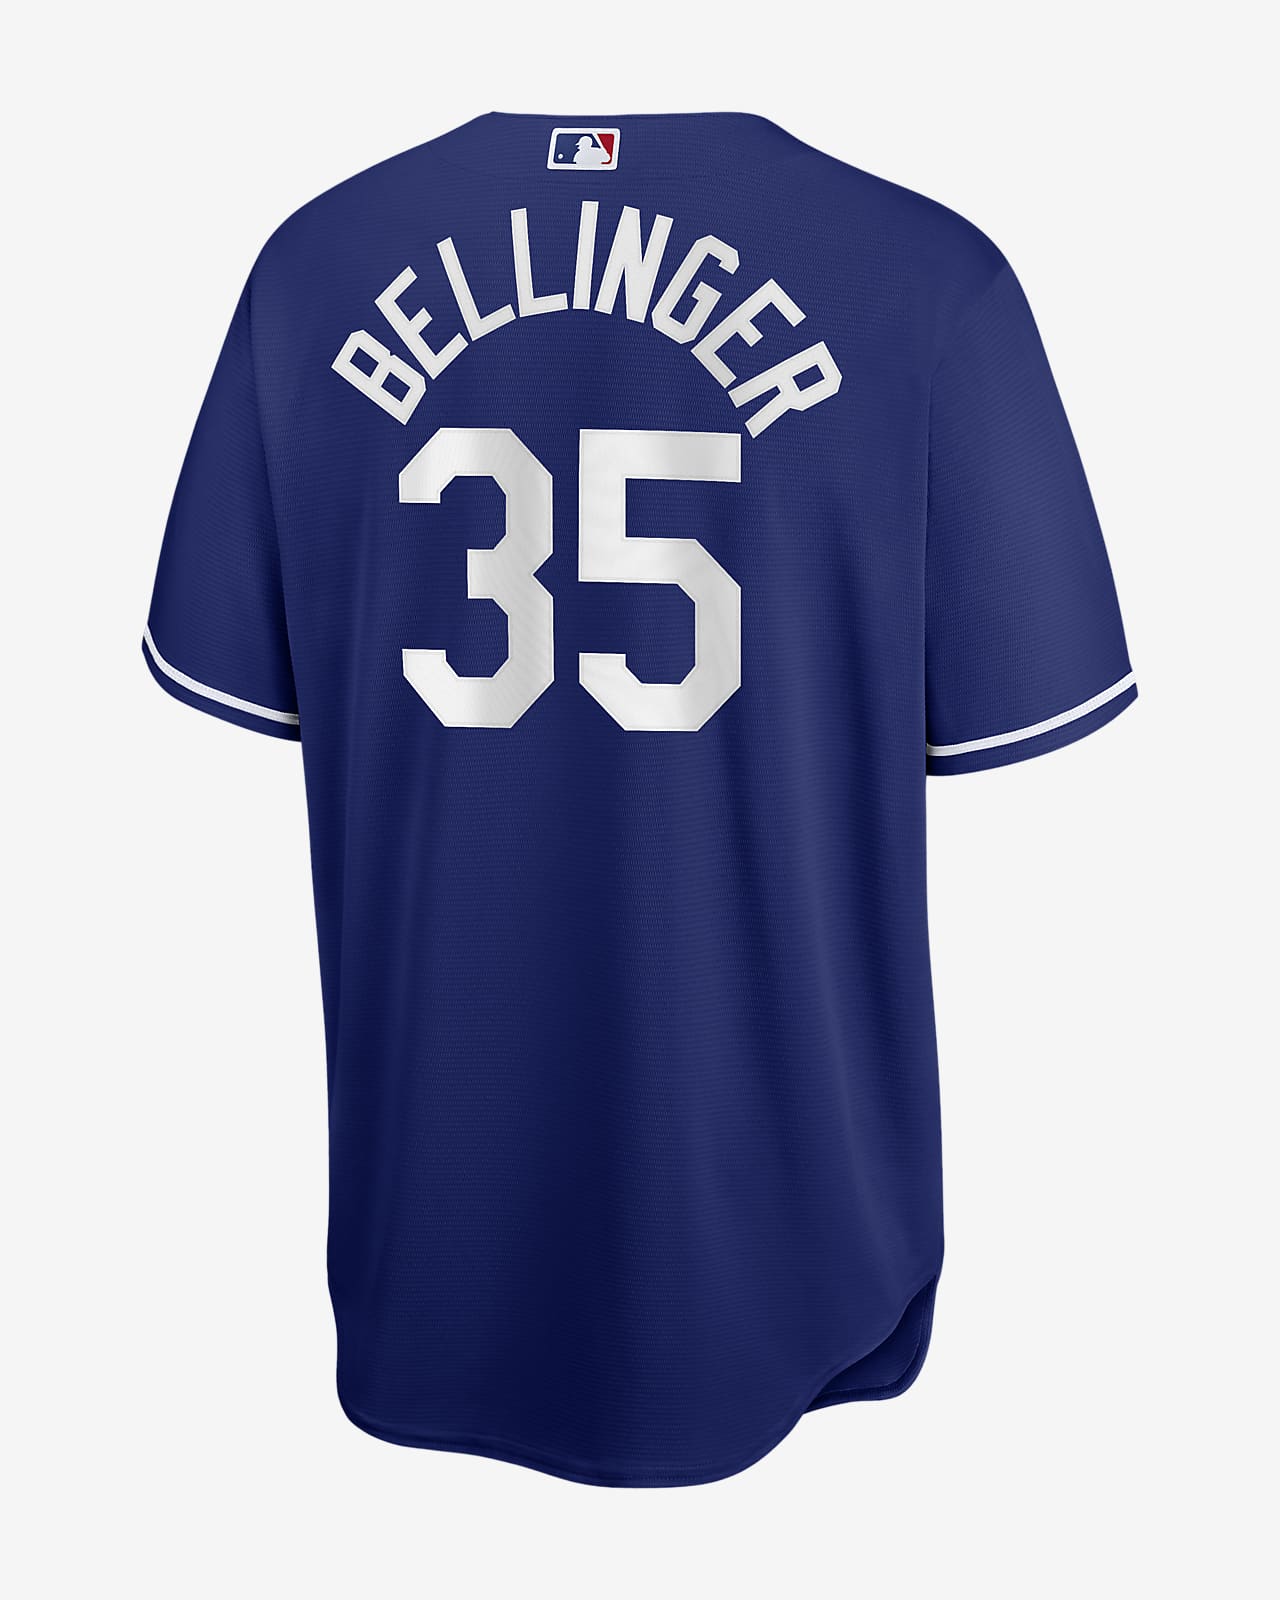 bellinger authentic jersey